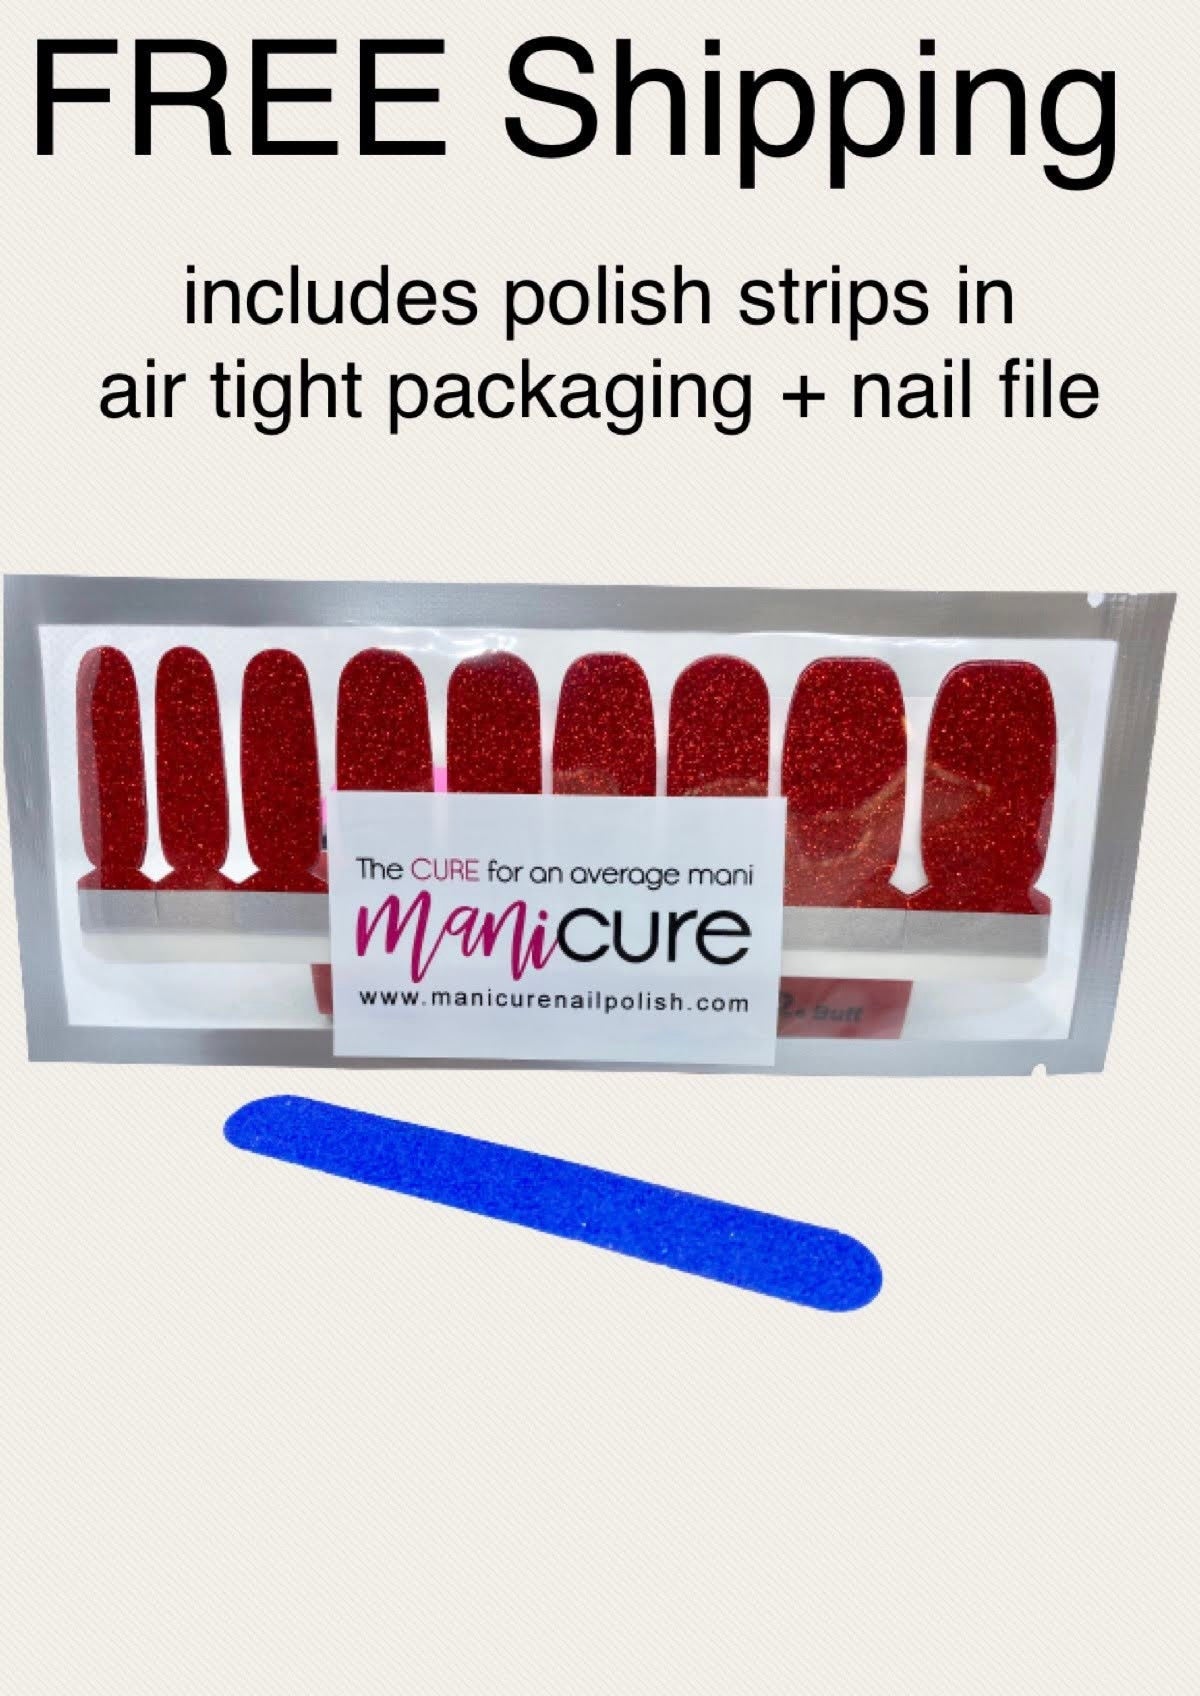 Ice Blue Glitter, ManiCURE  Real Nail Polish Strips, Dry Nail Polish, Nail Wraps, Stickers, Long Lasting, Non Toxic - manicurenailpolish